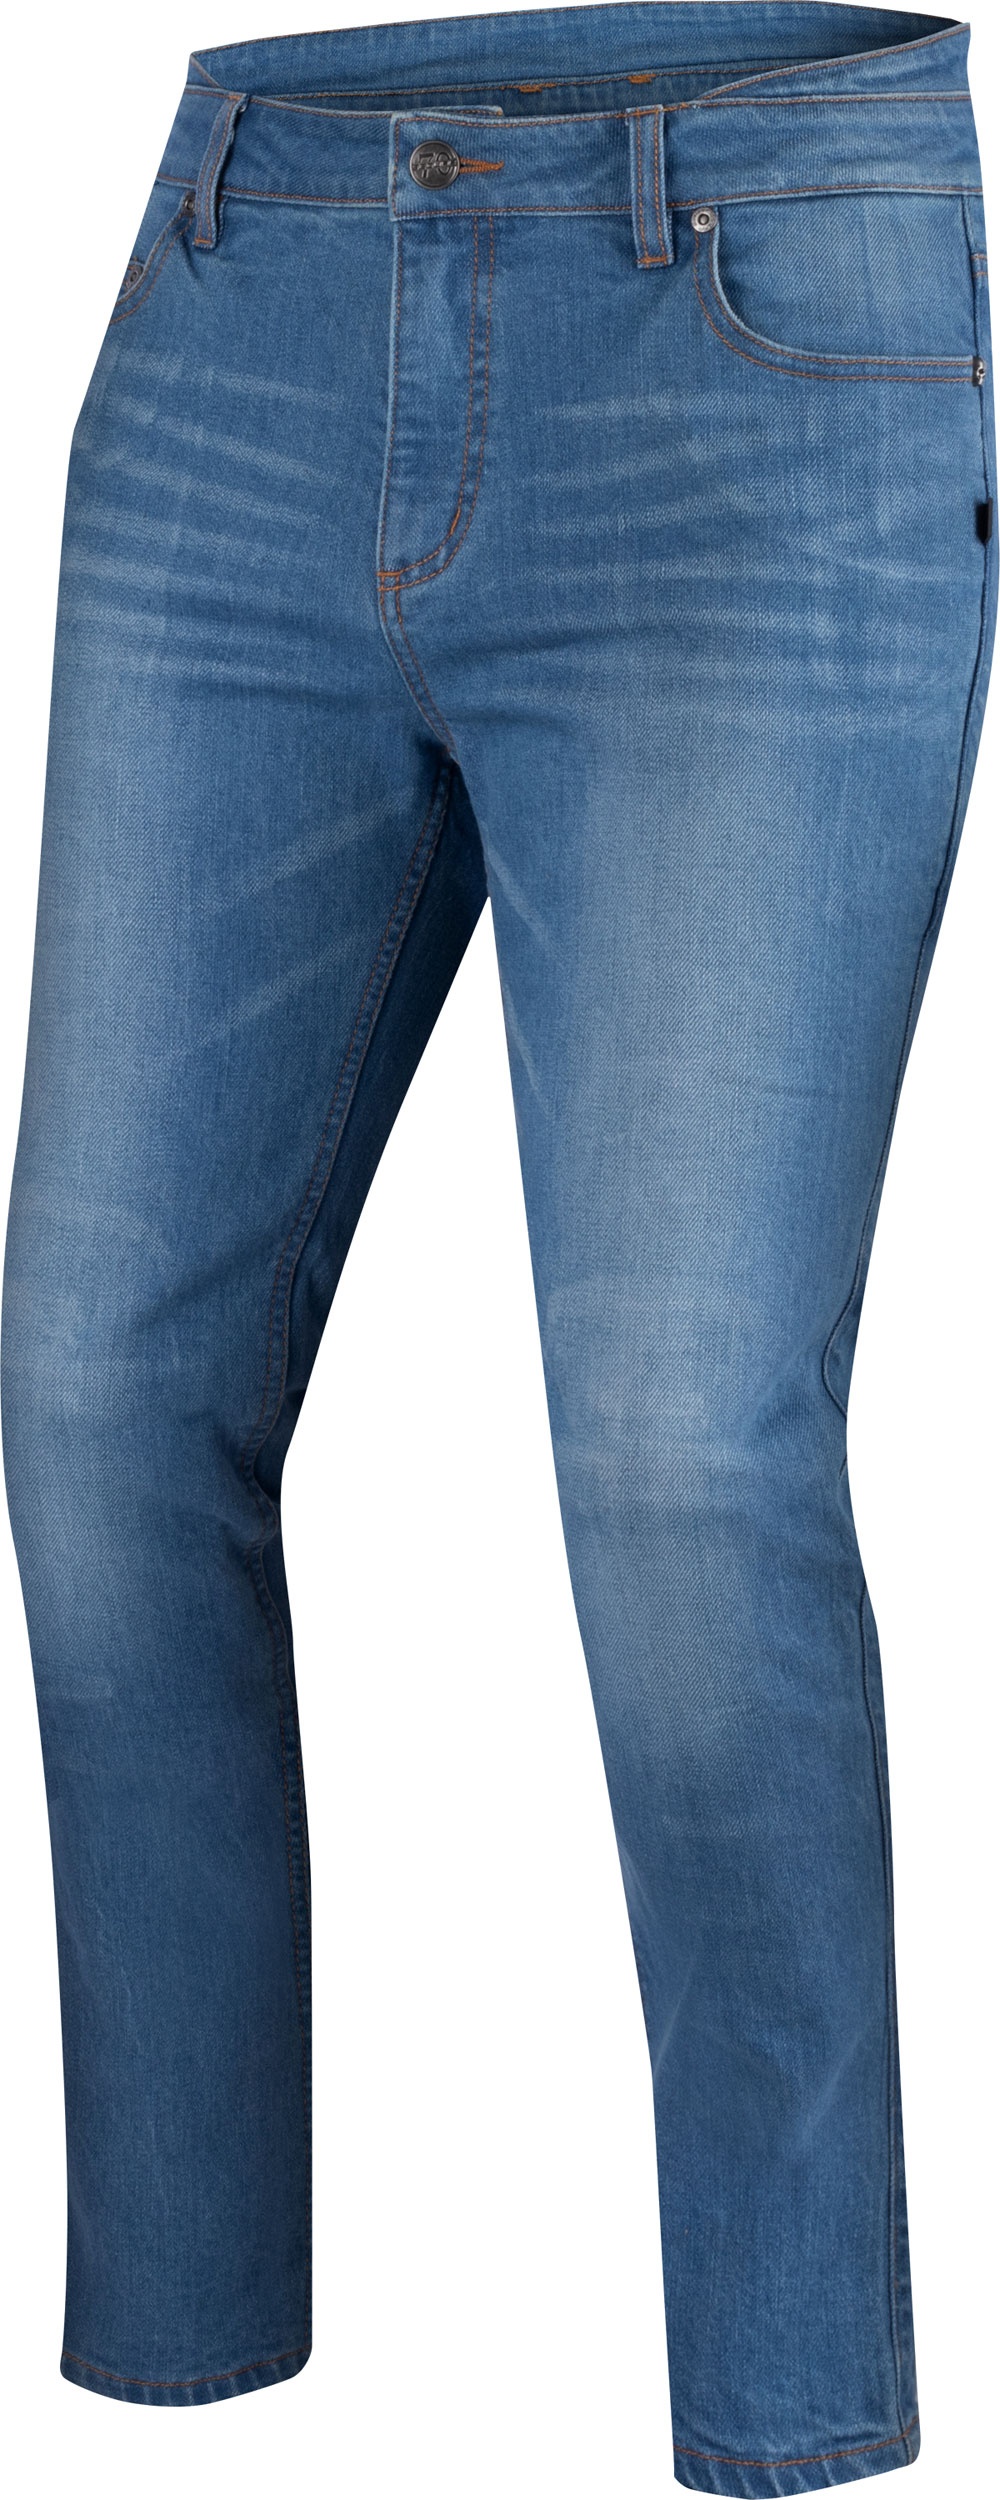 Segura Rosco, jeans - Bleu - 4XL